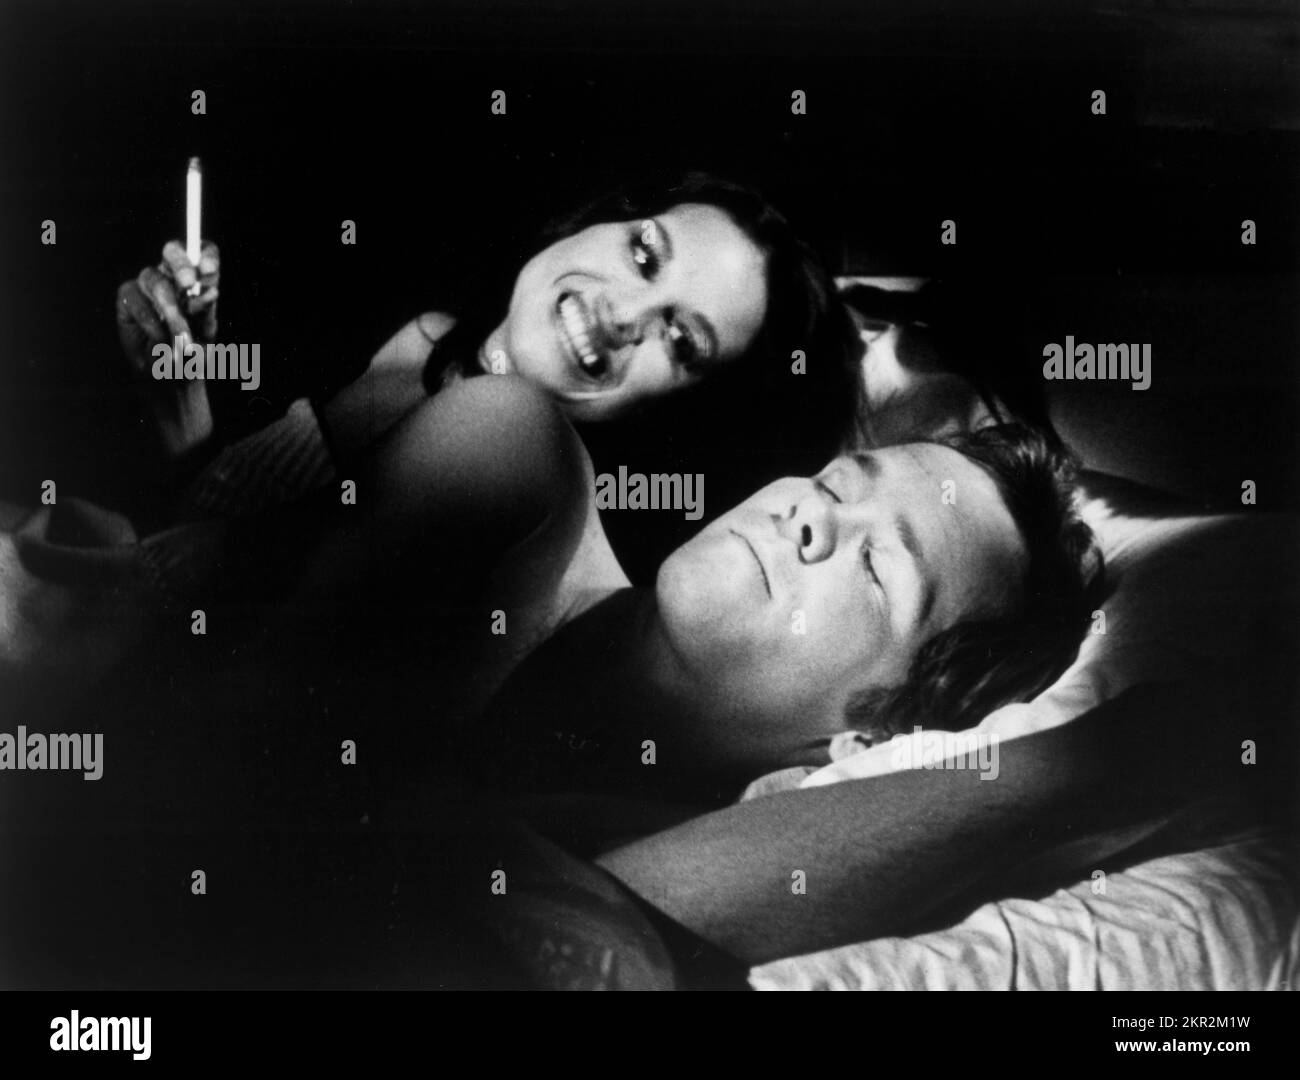 Lana Wood, Wendell Burton, on-set of the Film, 'Goodnight Jackie', aka Games Guys Play', General Films, 1974 Stock Photo